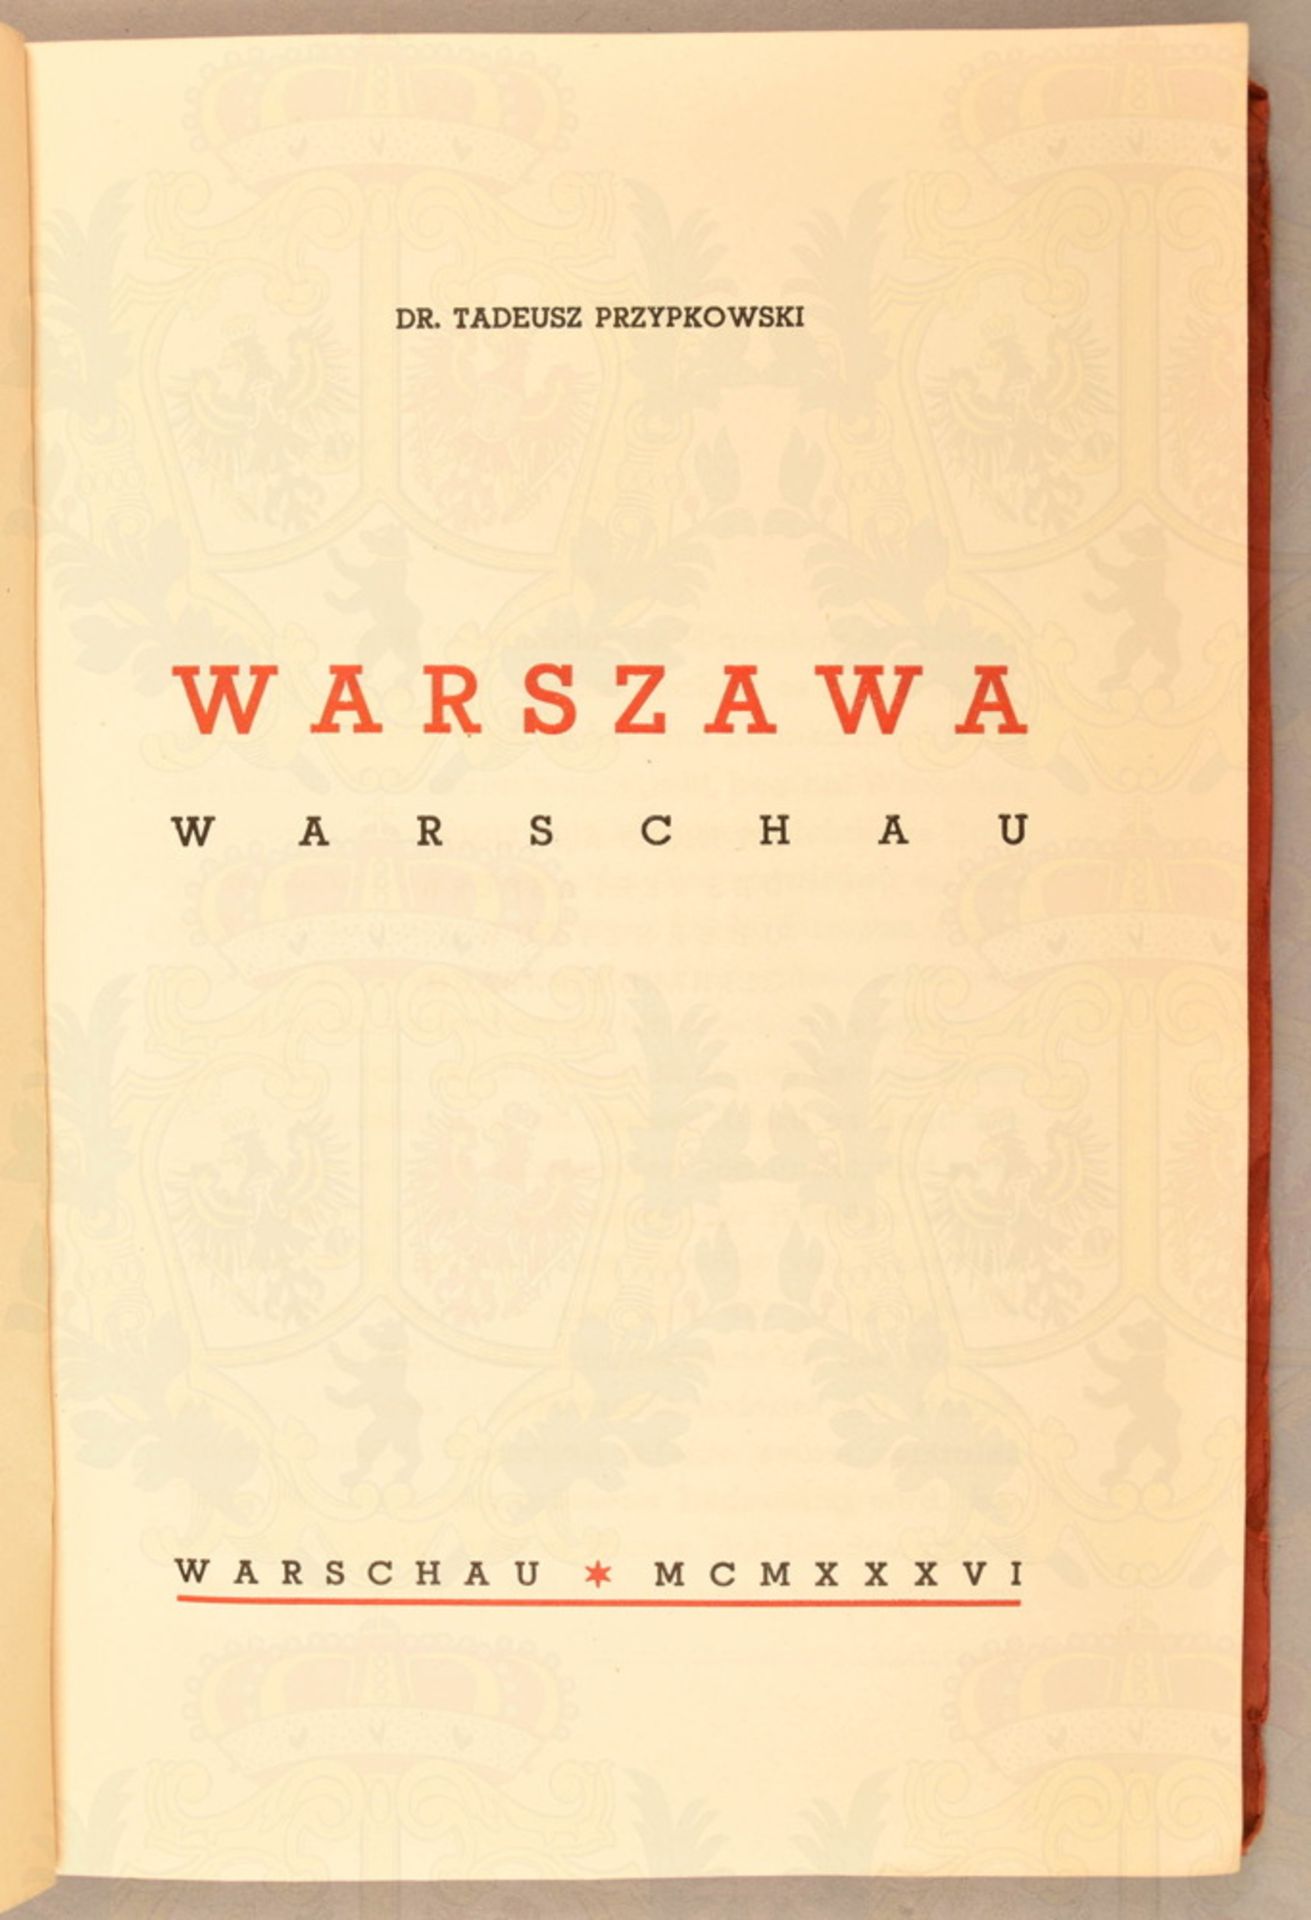 Signature of 1936 Warsaw Mayor Stefan Bronislaw Starzynski (1893-1939)